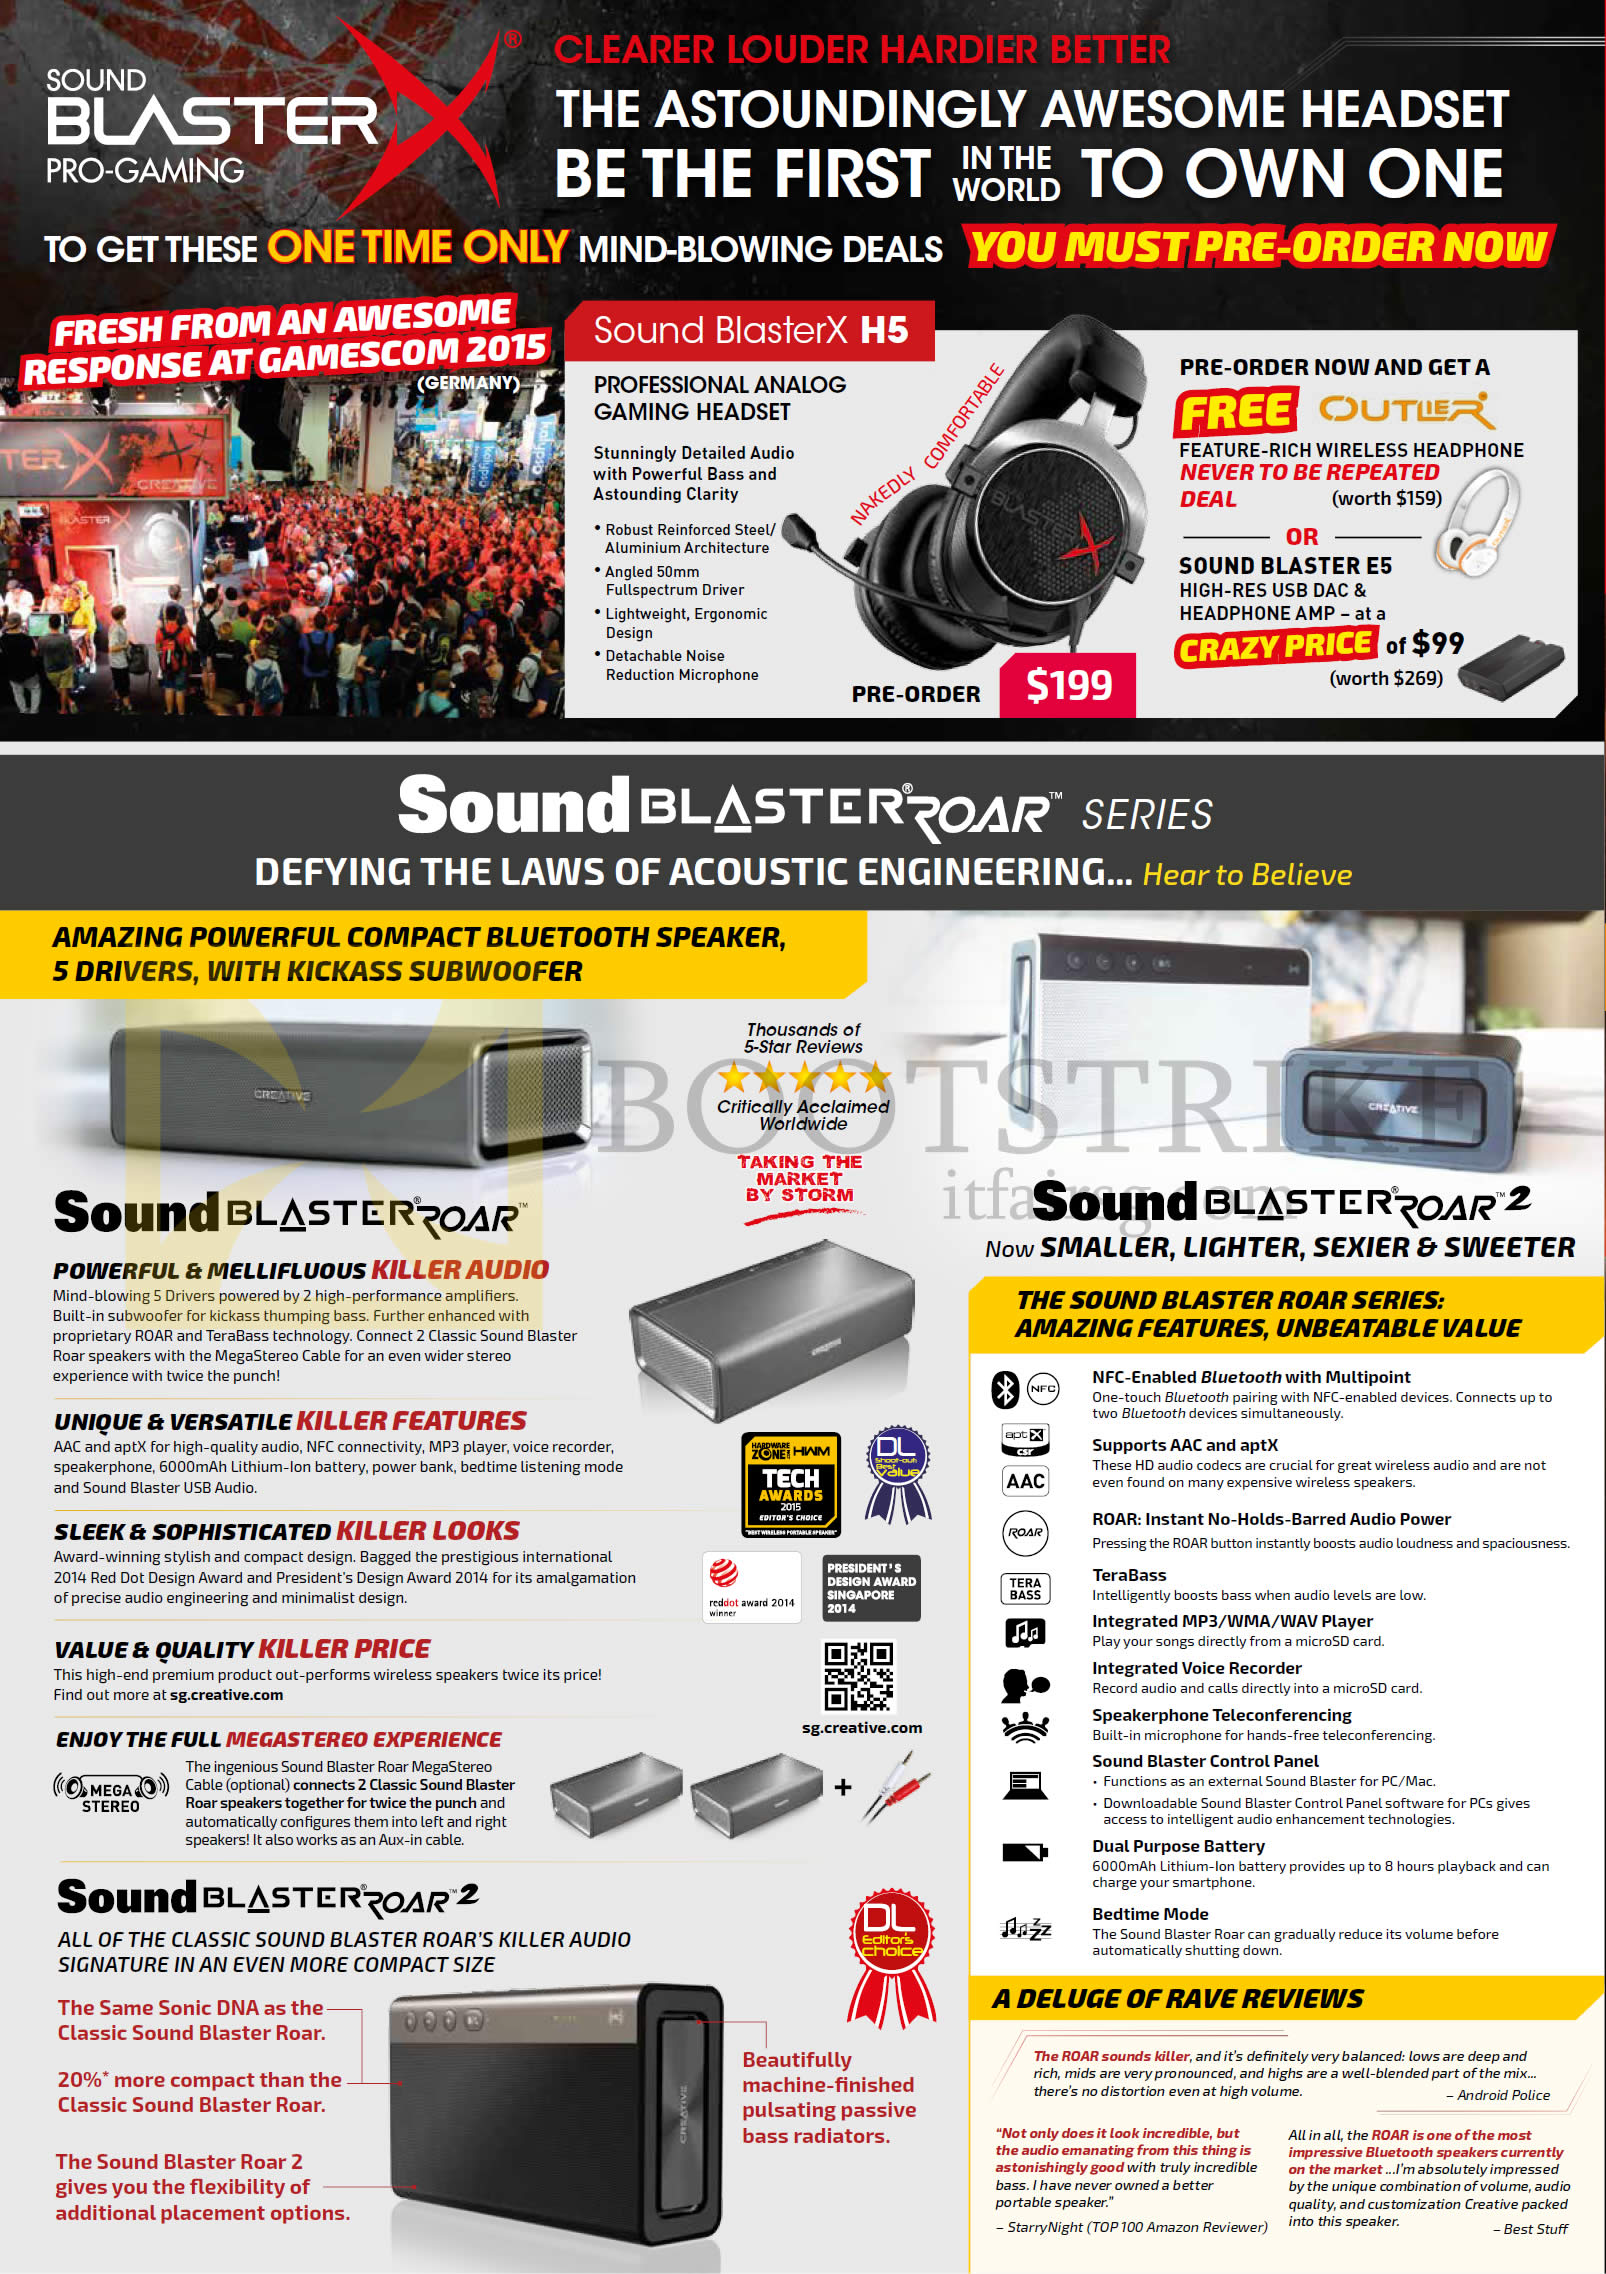 Creative Headset, Speakers, Sound BlasterX H5, Roar, Roar 2, » COMEX 2015  Hot Deals, Offers & Promotions 4 – 6 Sep 2015 